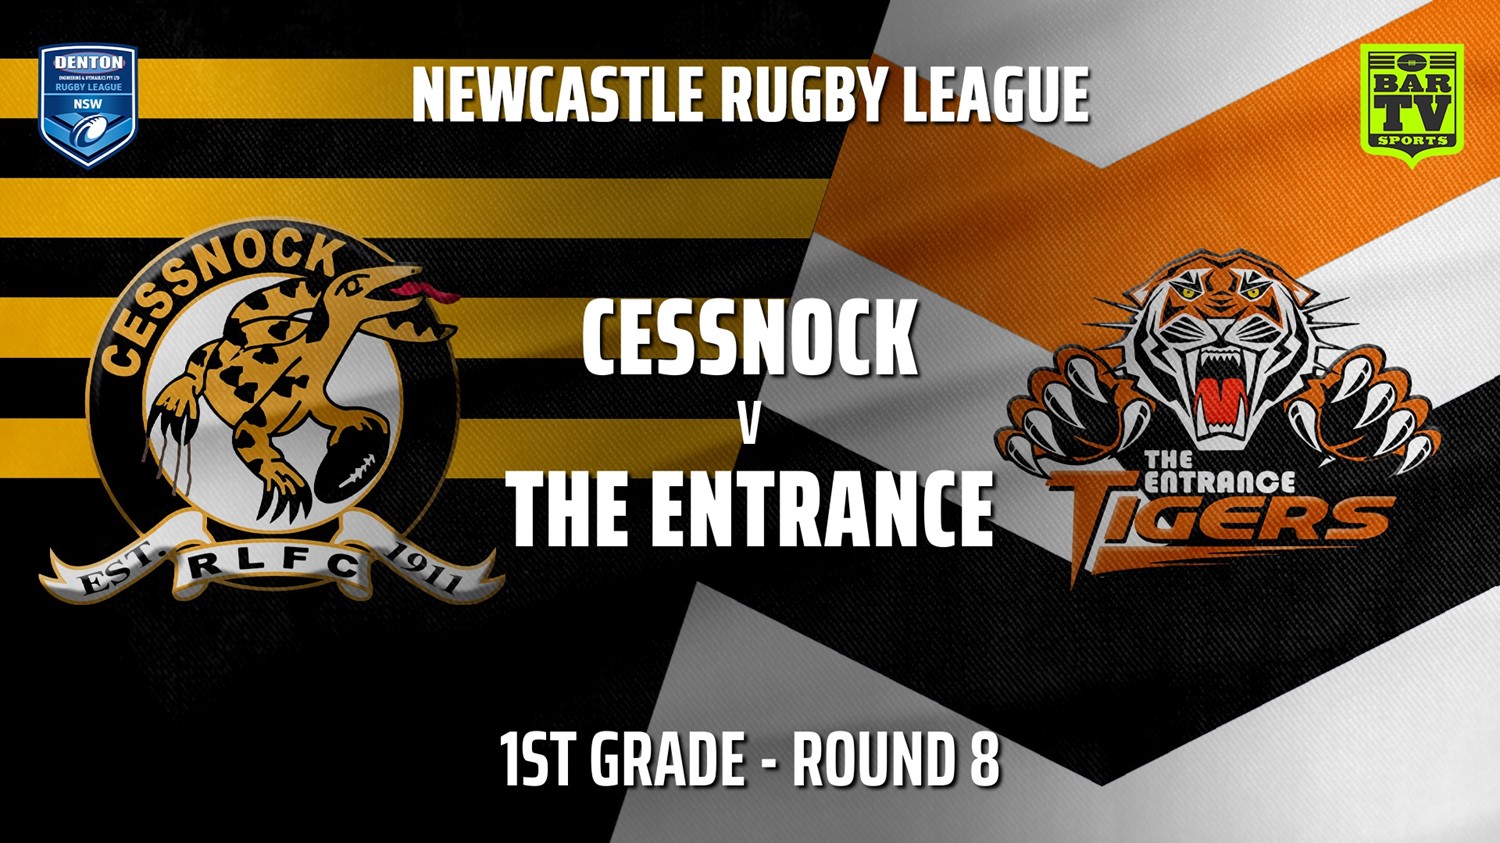 210522-Newcastle Rugby League Round 8 - 1st Grade - Cessnock Goannas v The Entrance Tigers Slate Image